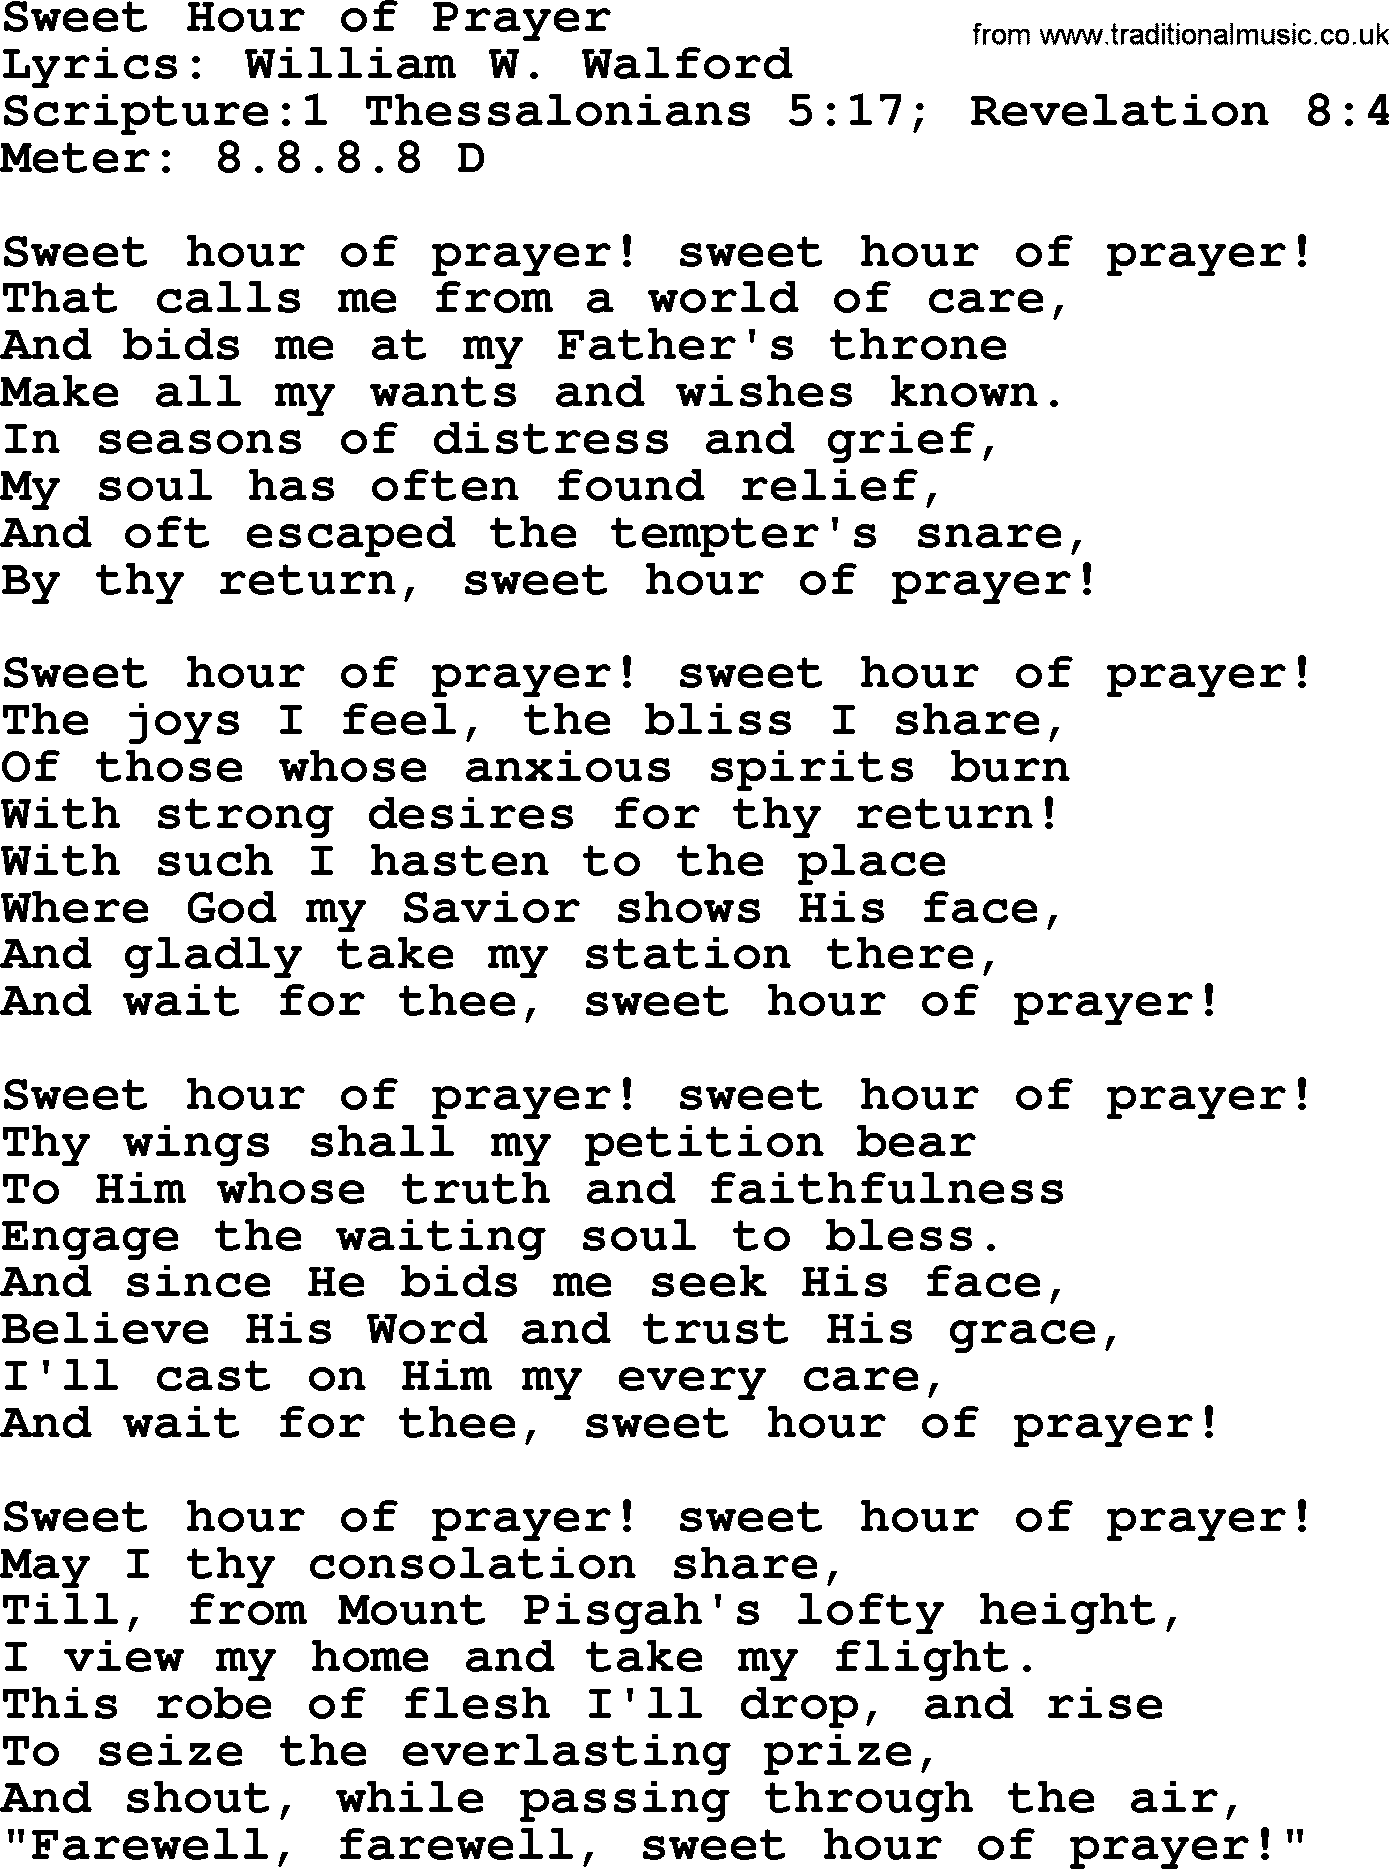 Hymns about  Angels, Hymn: Sweet Hour of Prayer, lyrics, sheet music, midi & Mp3 music with PDF